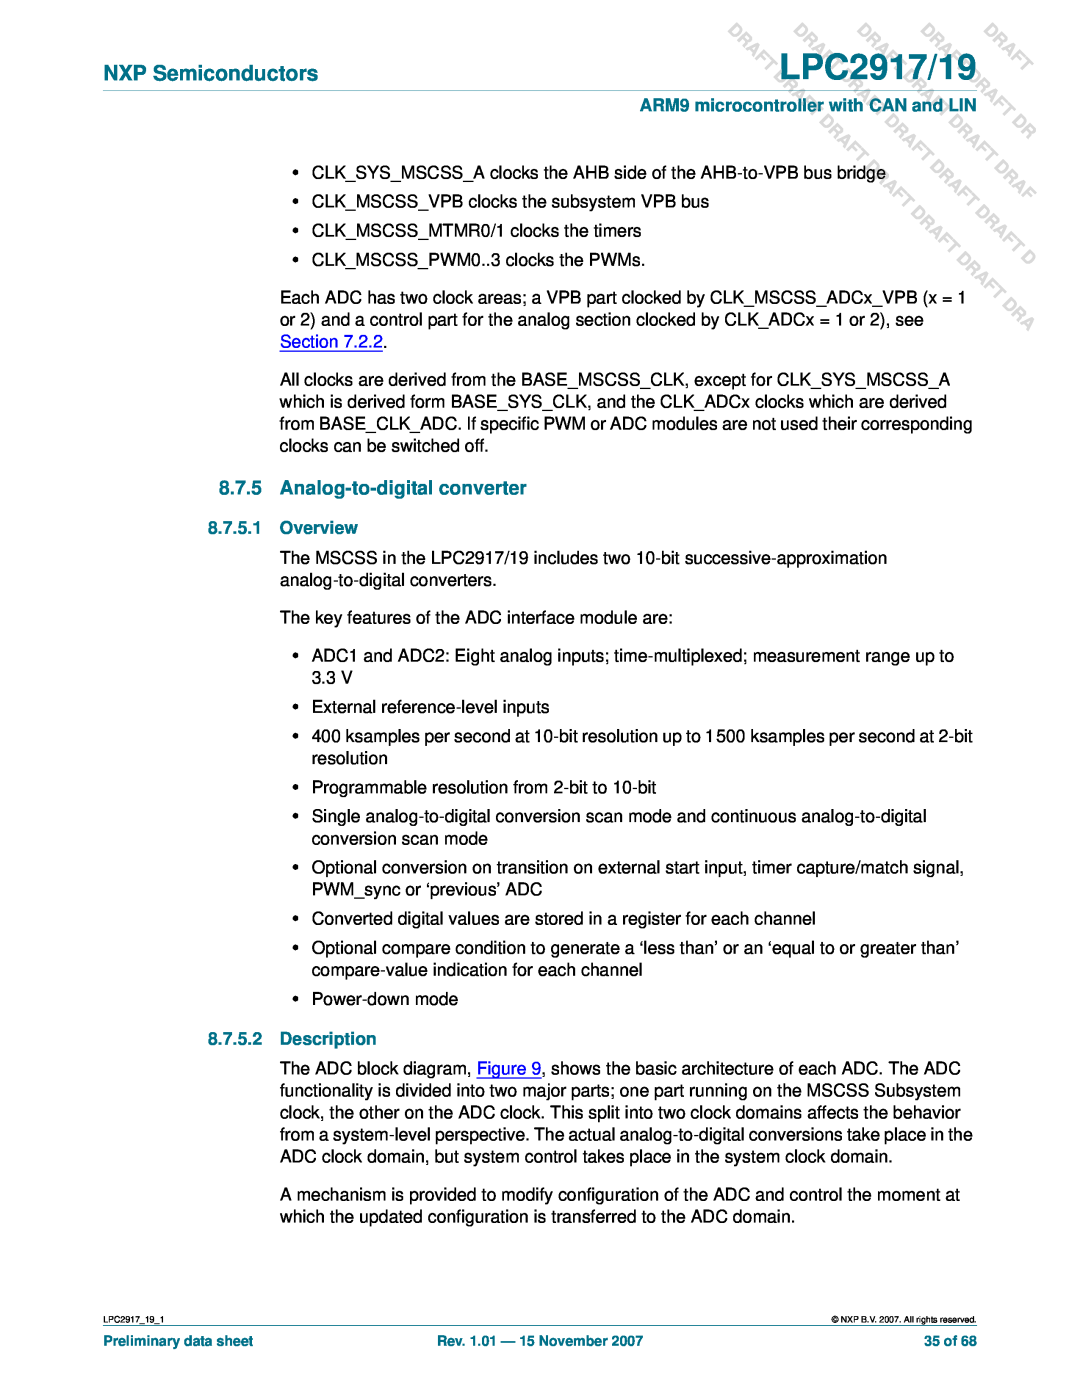 NXP Semiconductors LPC2919 user manual Analog-to-digital converter, Overview, Description, DLPC2917/19, Draft 